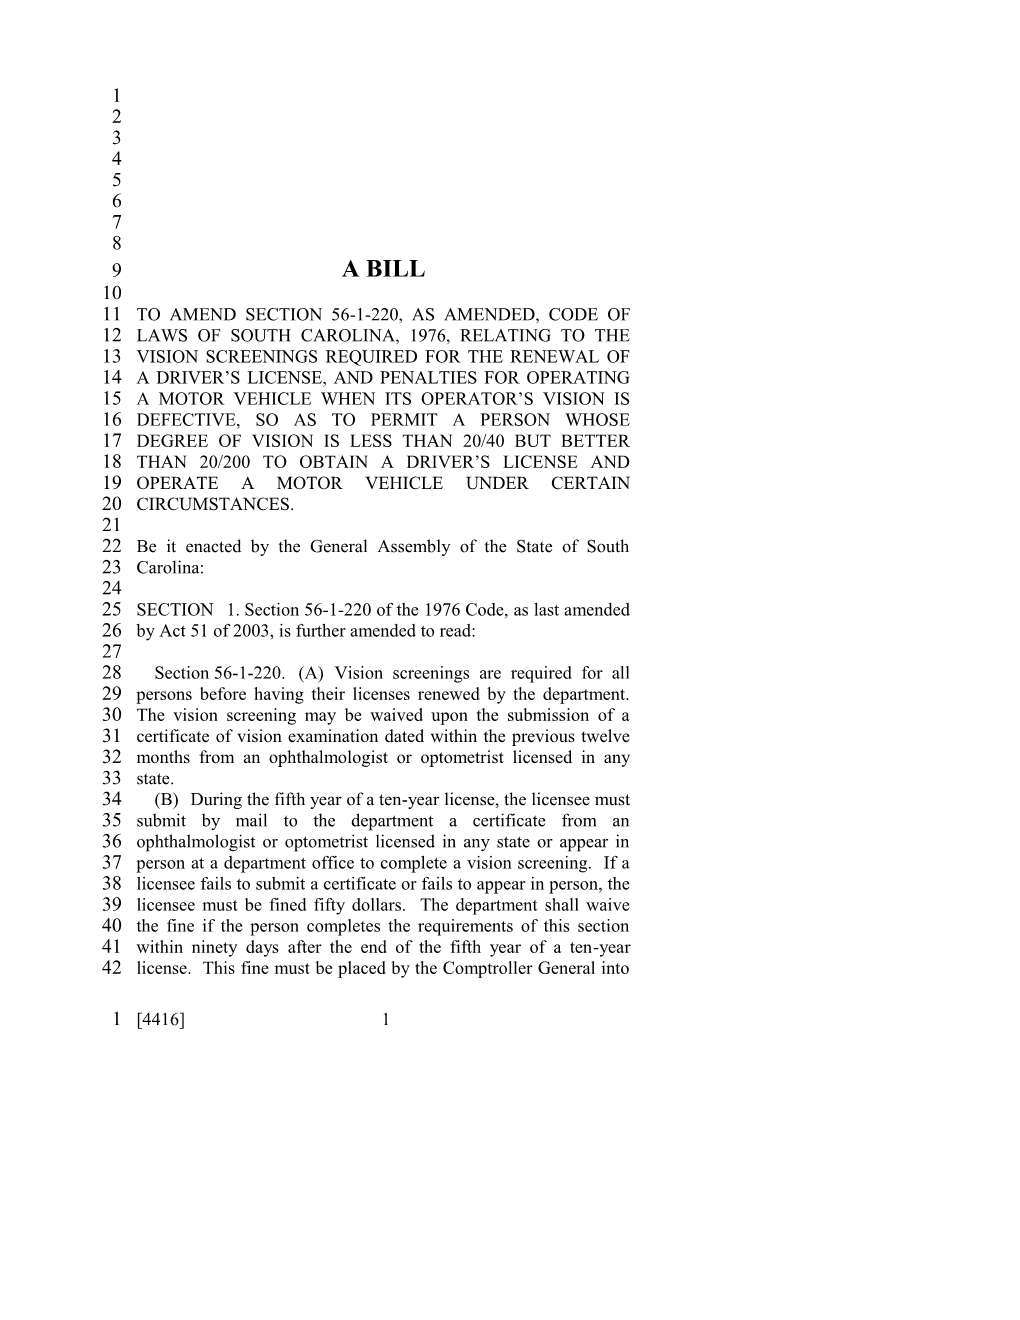 2003-2004 Bill 4416: Driver's License Renewal, Vision Screening Requirements Revised